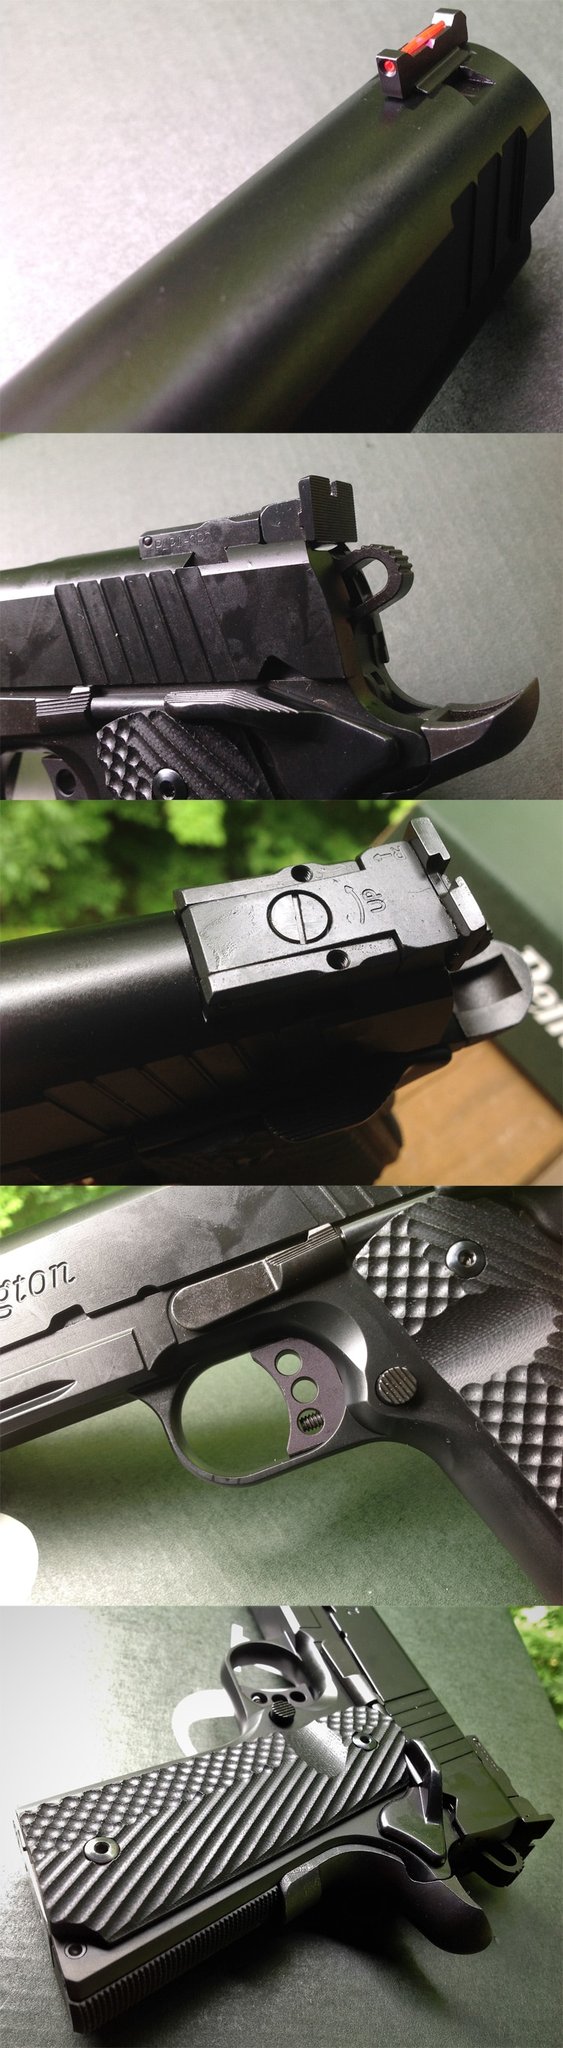 2-Remington-1911R1-10mm